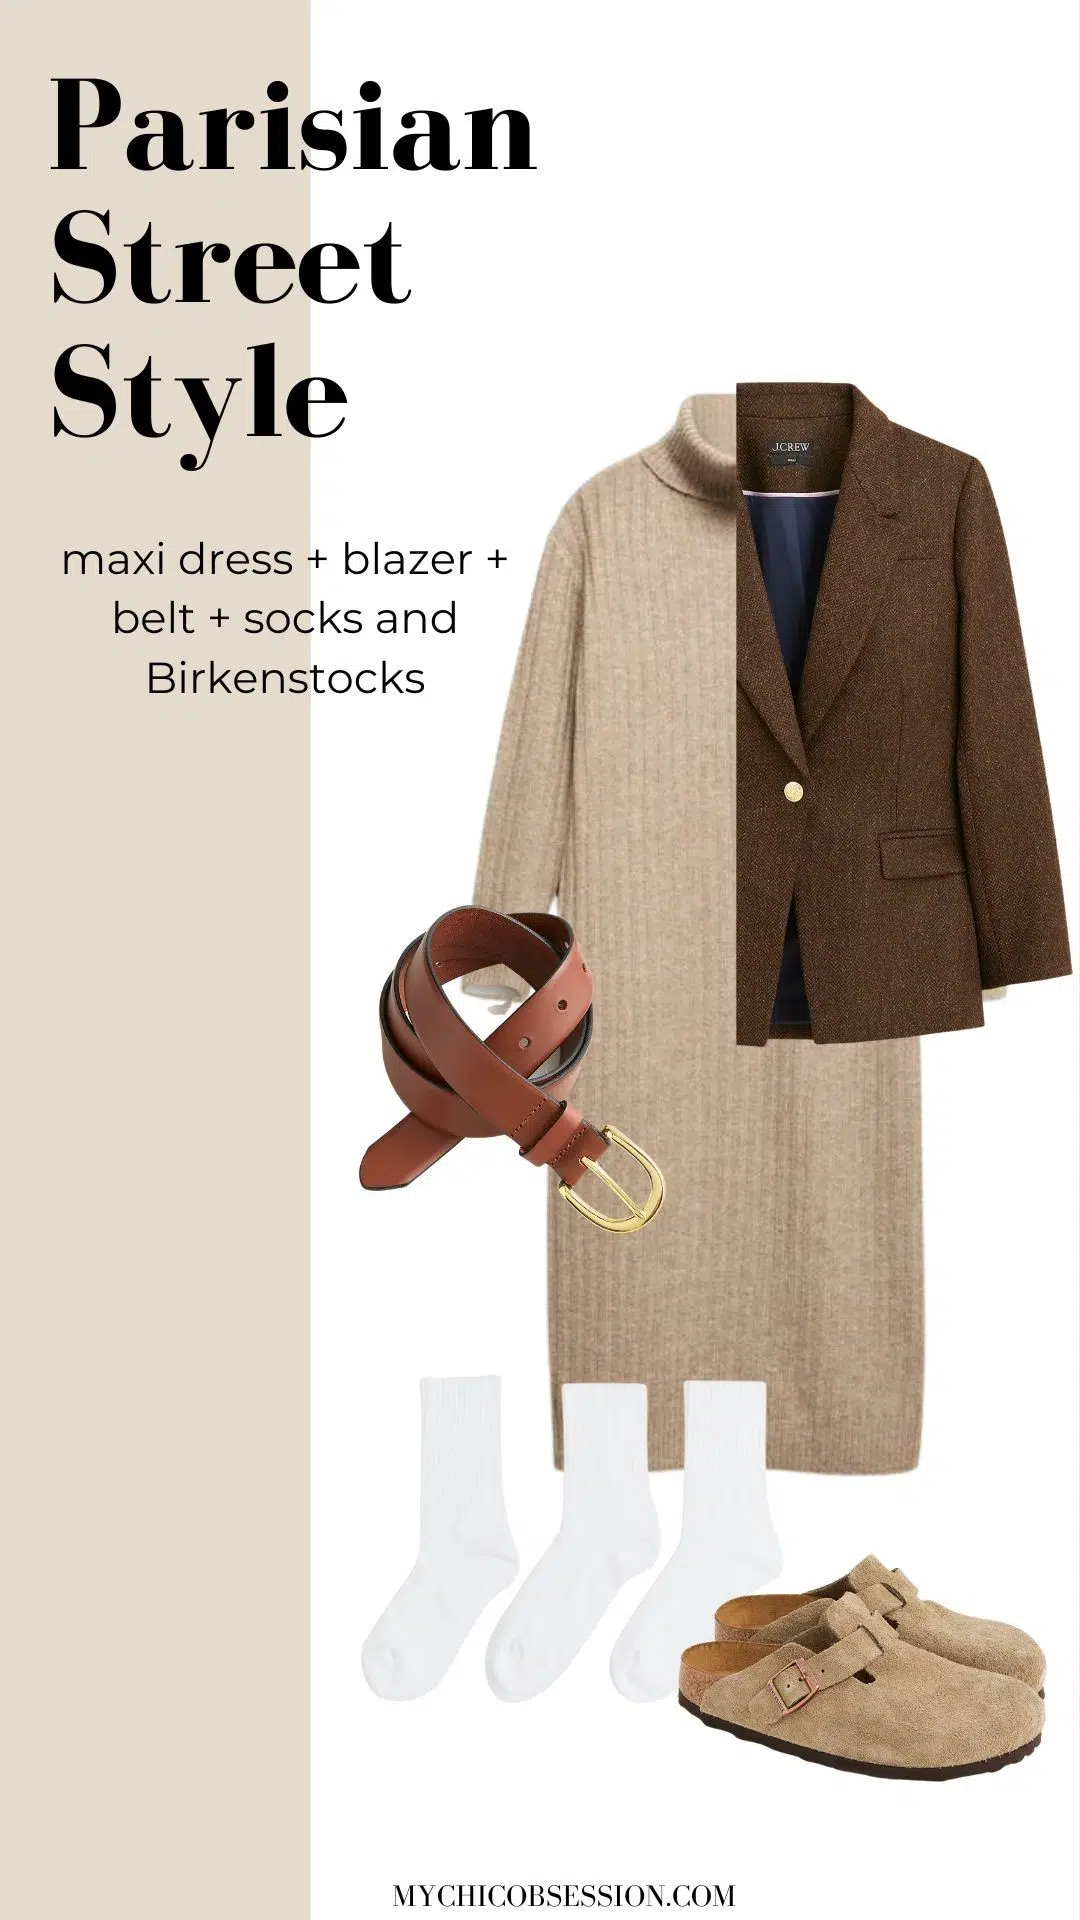 maxi dress + blazer + belt + socks + birkenstocks